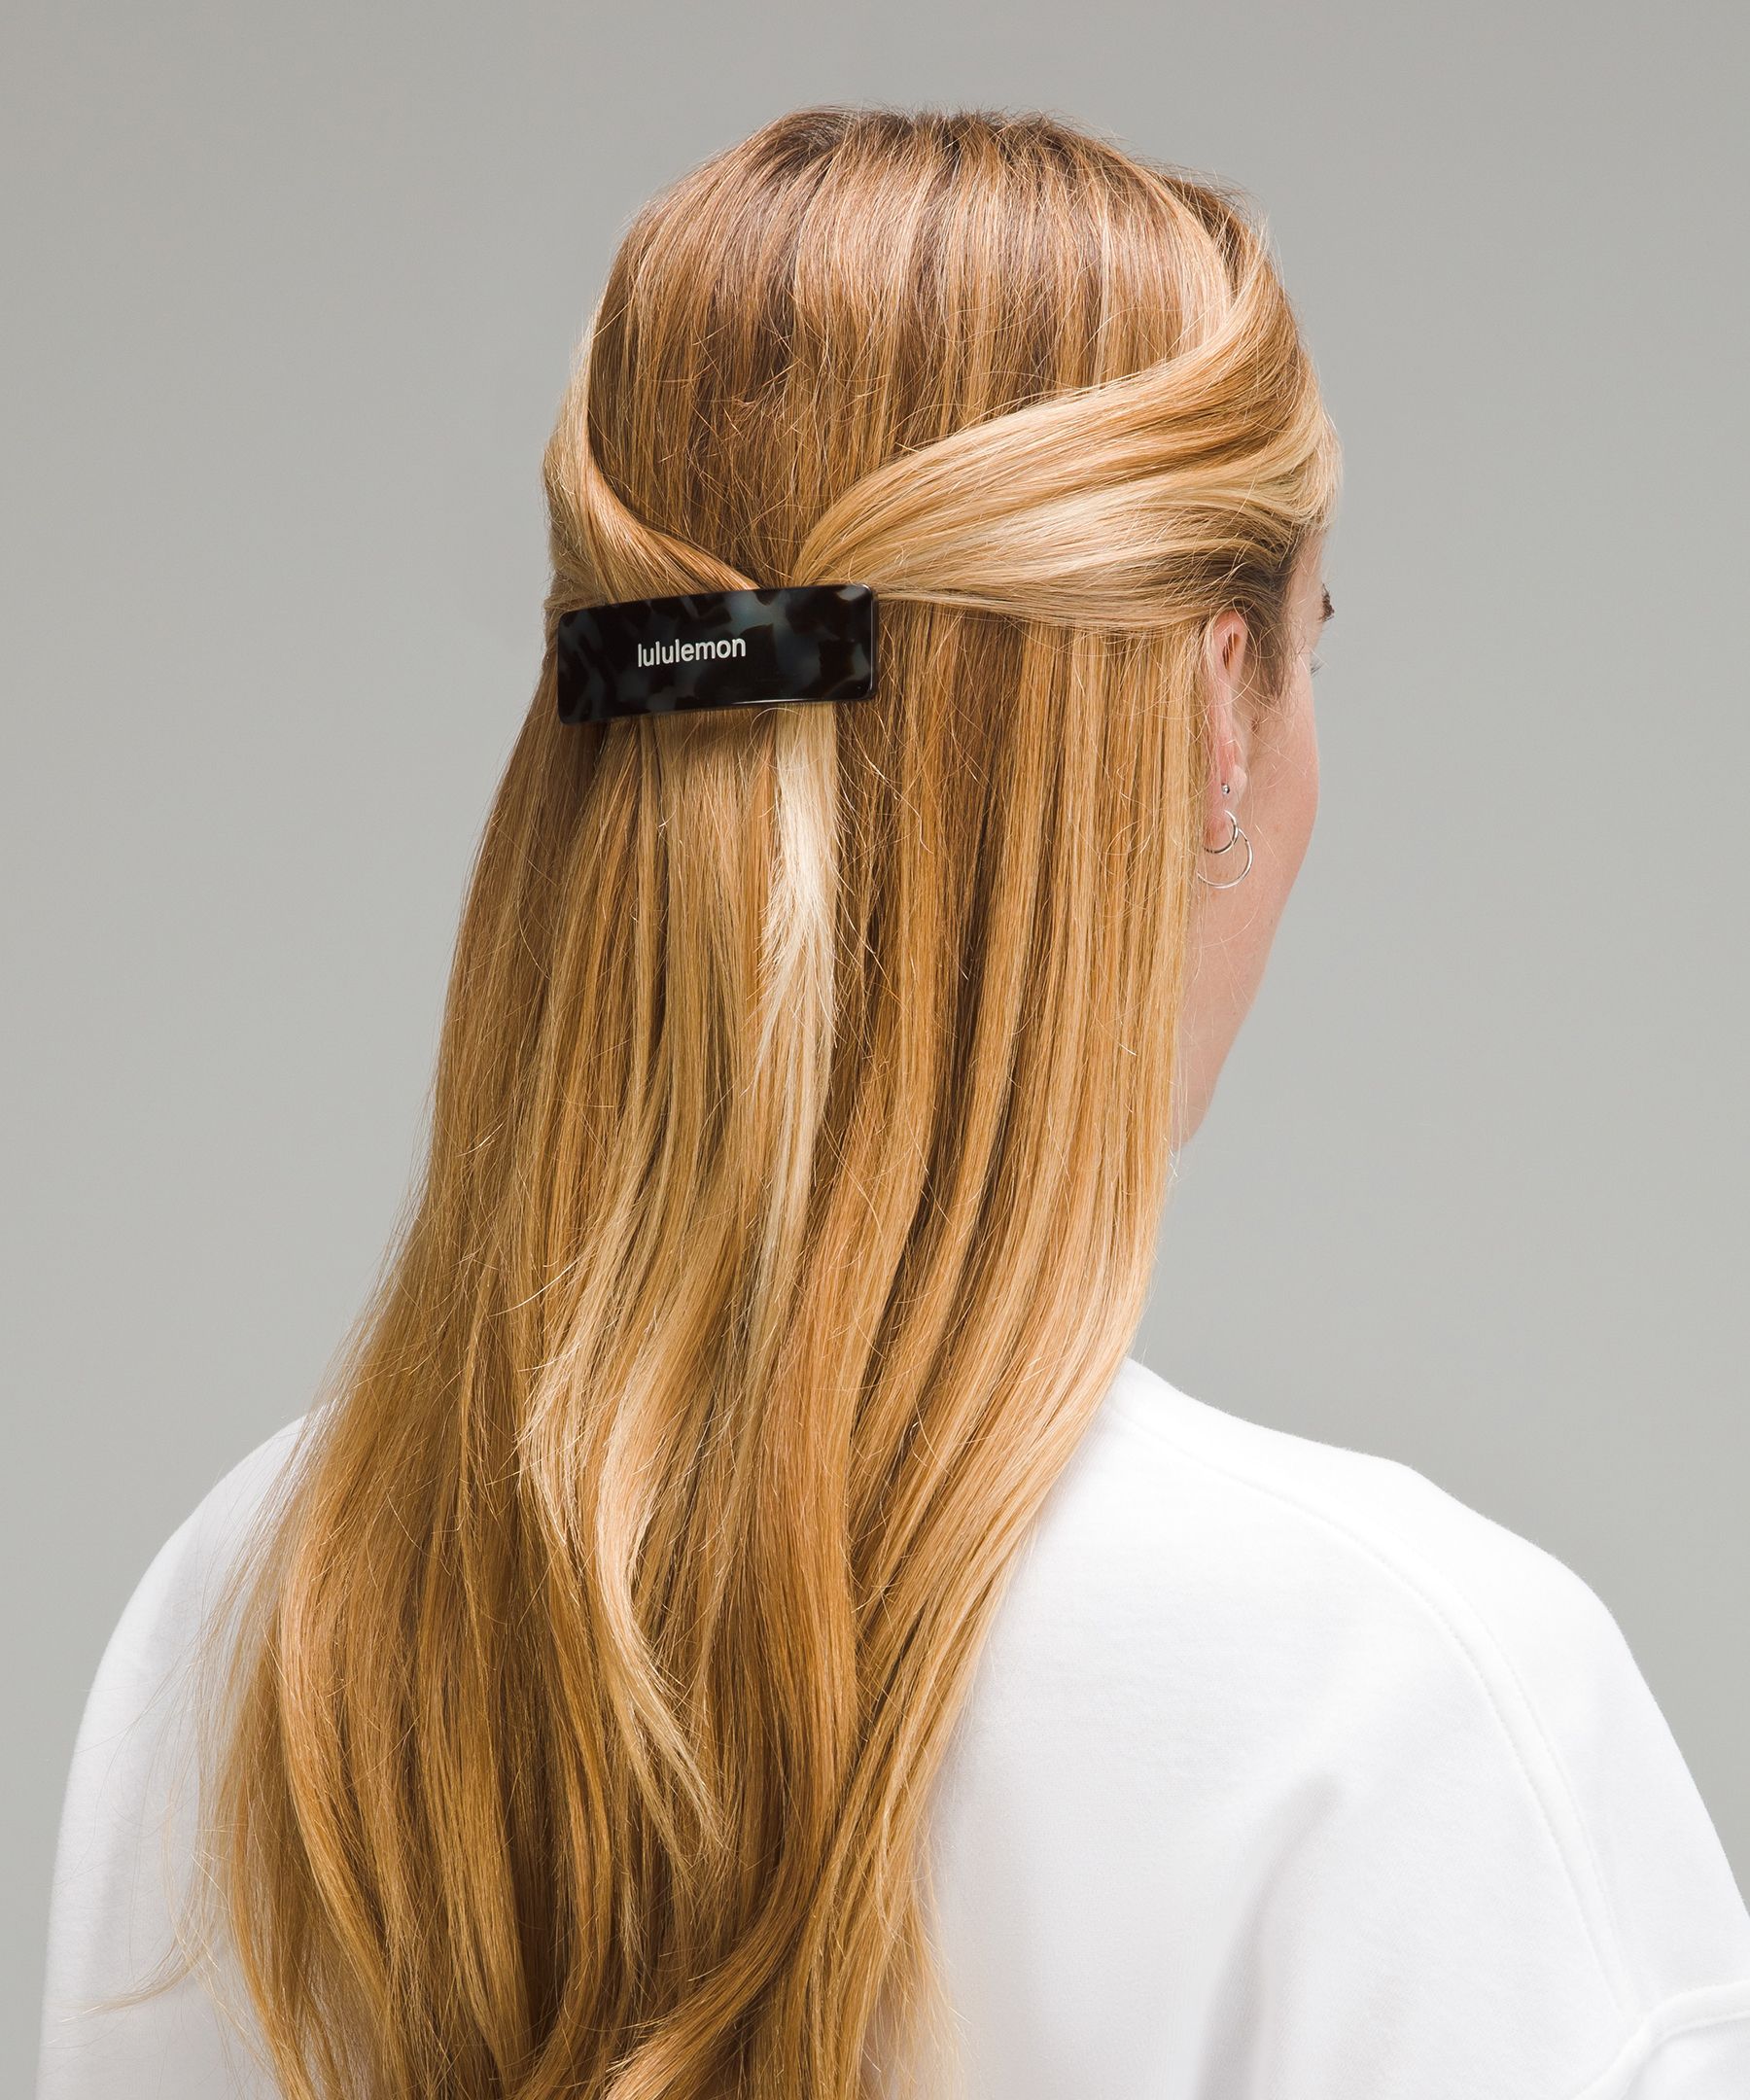 Hair Barrette | Women's Accessories